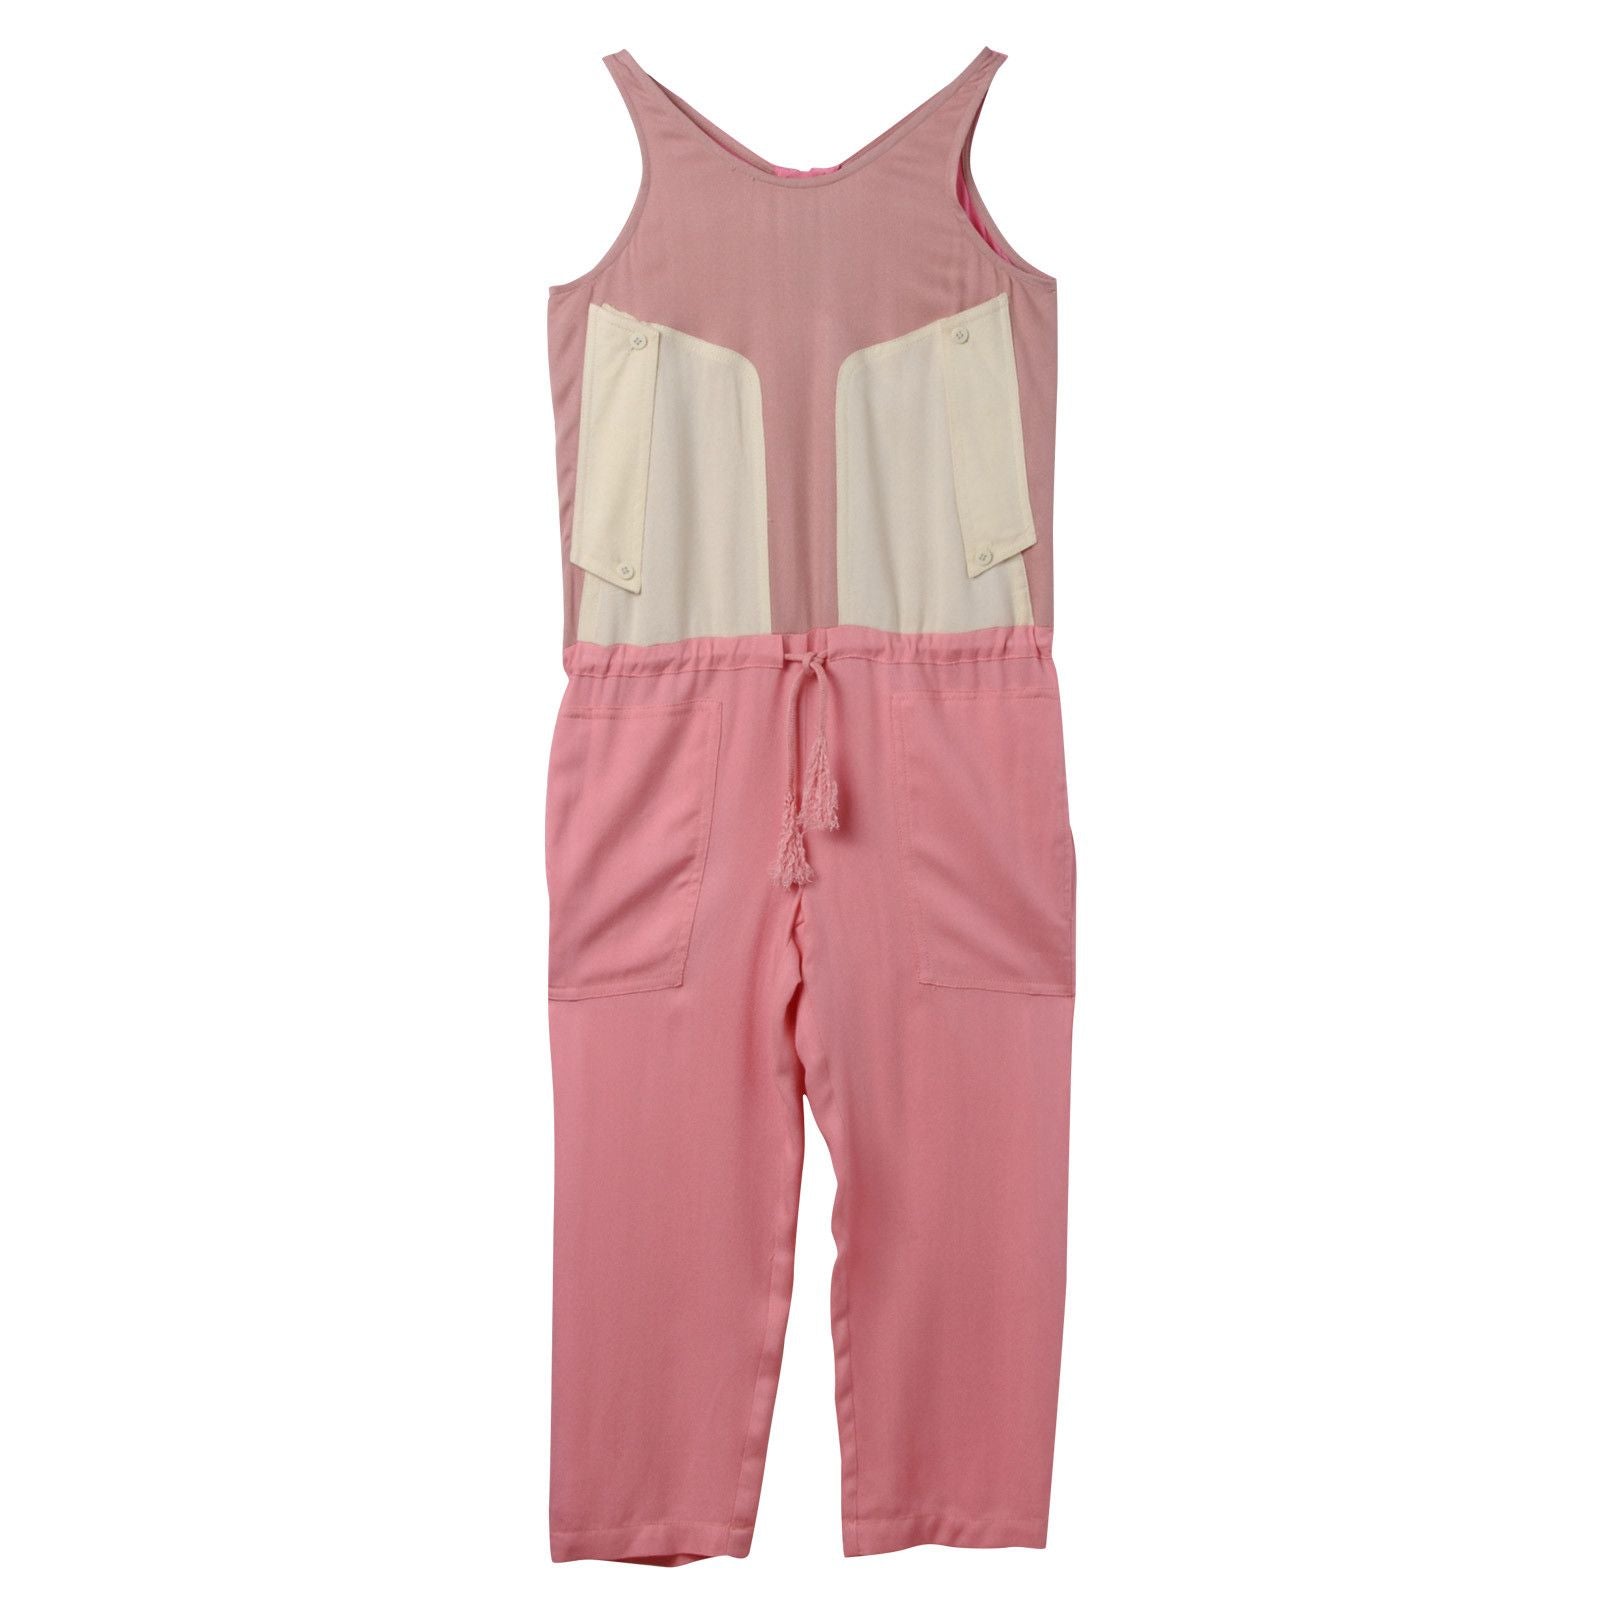 Girls Dark Pink Jumpsuit With Bow Trims - CÉMAROSE | Children's Fashion Store - 1